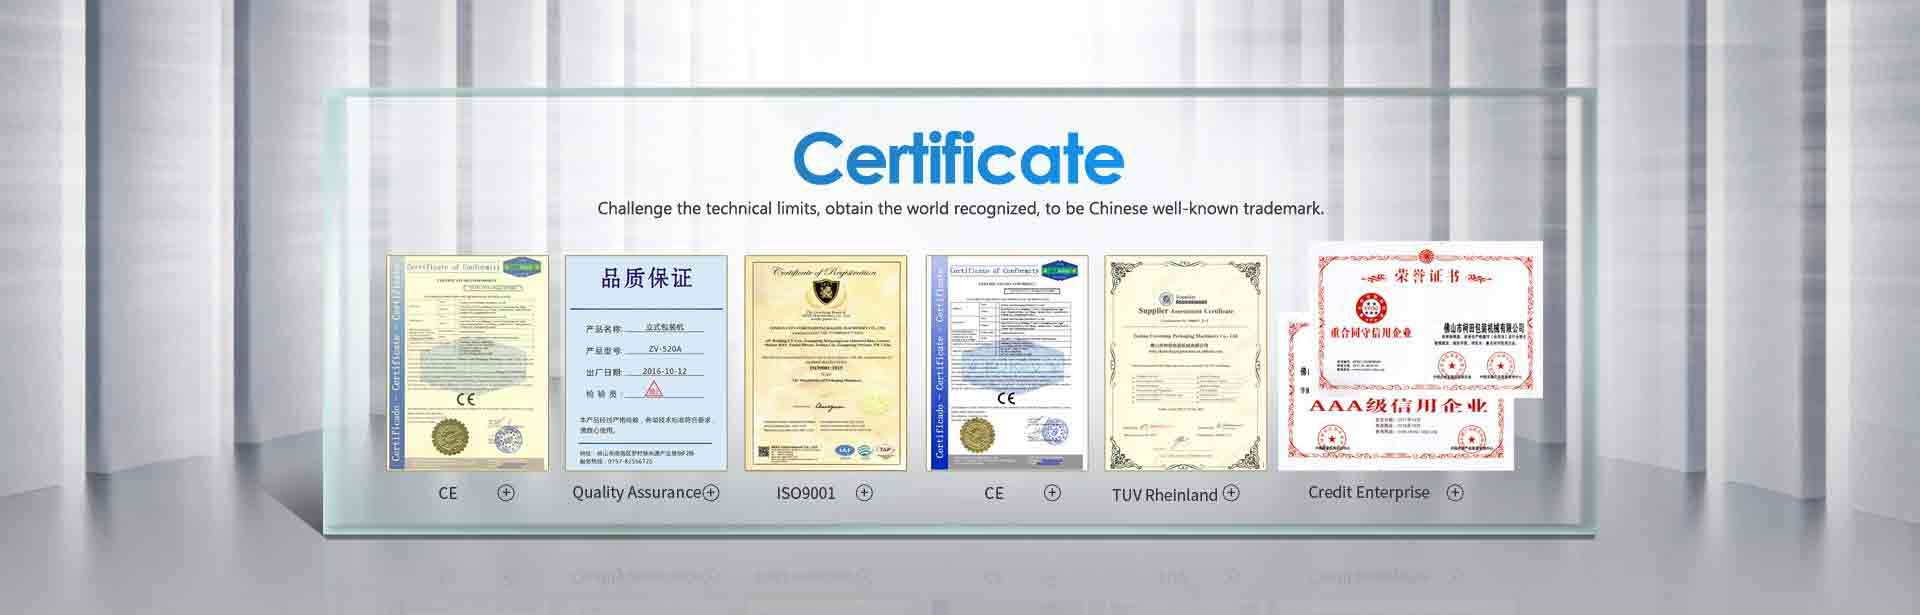 Packaging machine Certificate